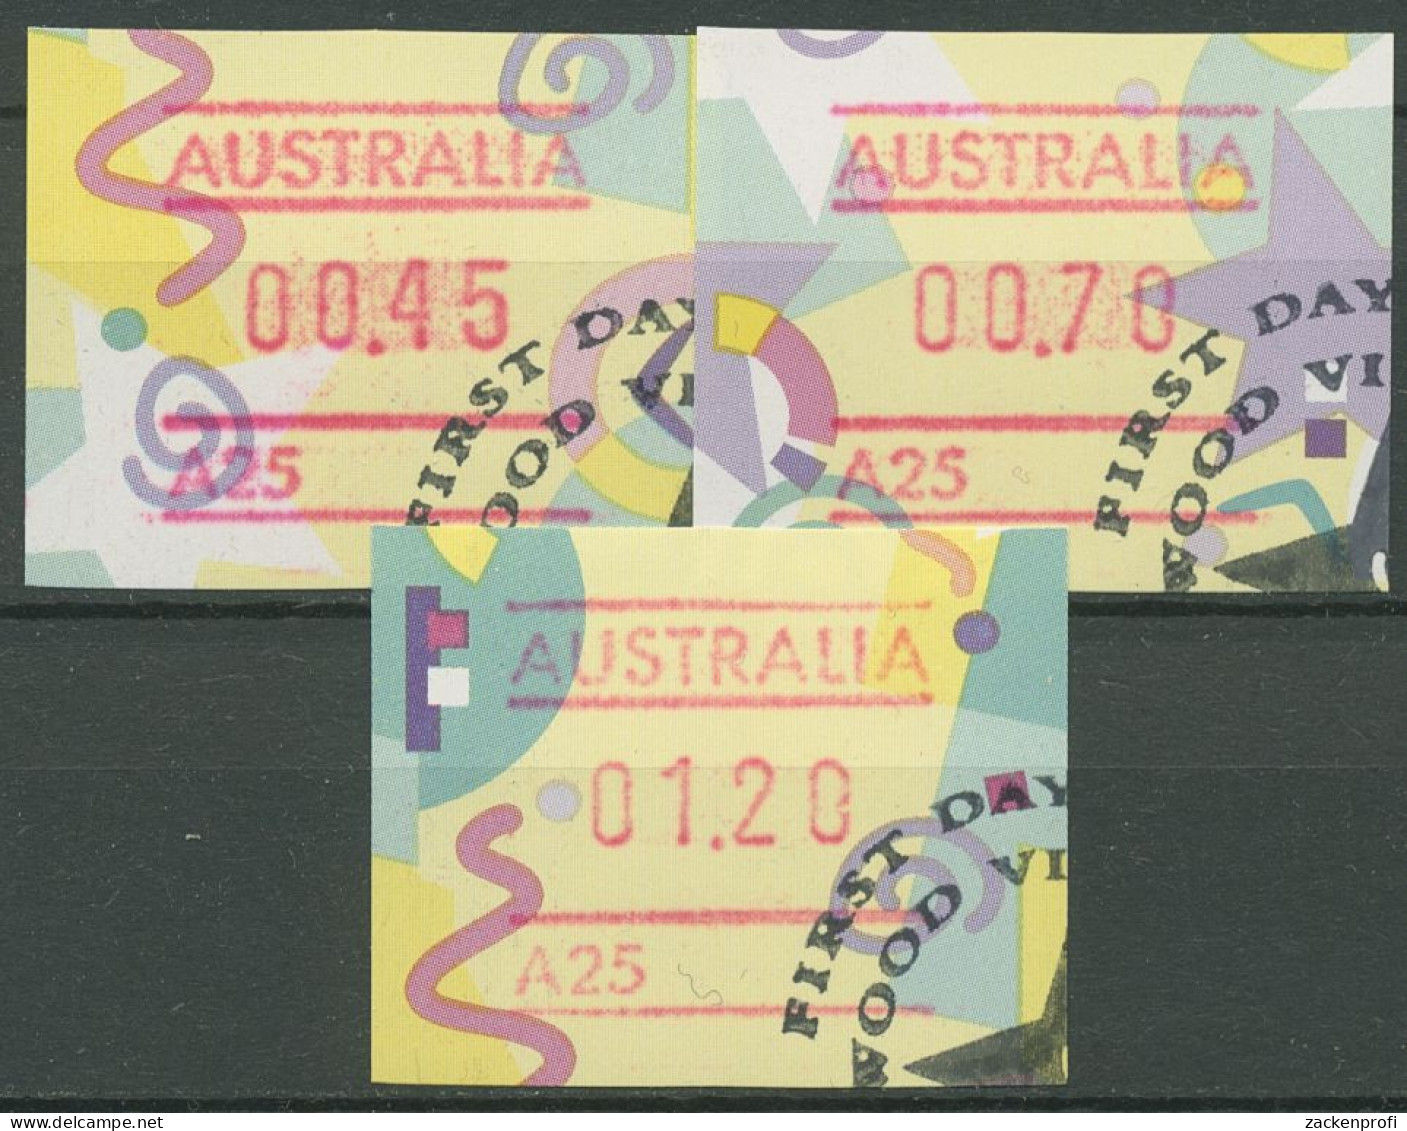 Australien 1996 Figuren Tastensatz Automatenmarke 51 S1, A 25 Gestempelt - Vignette [ATM]